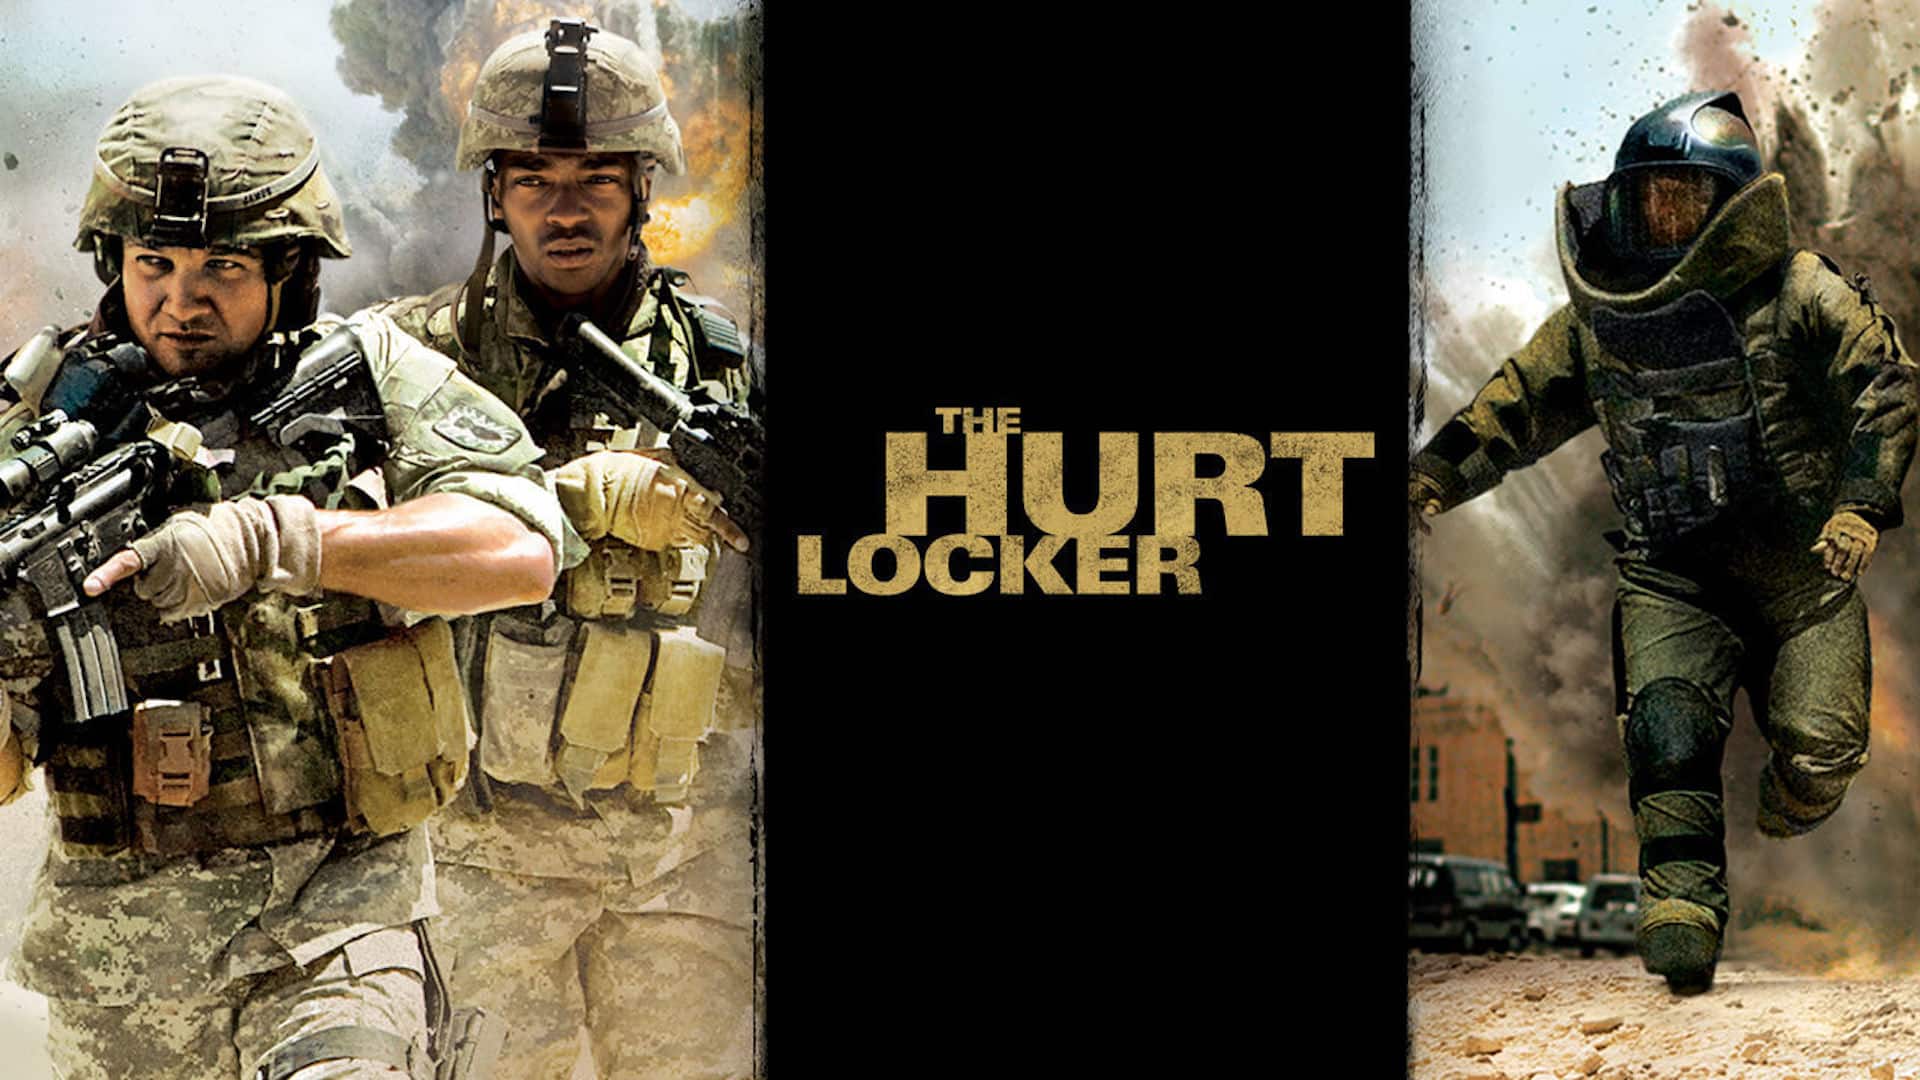 the hurt locker, film di guerra diretto da una donna, 2008 USA